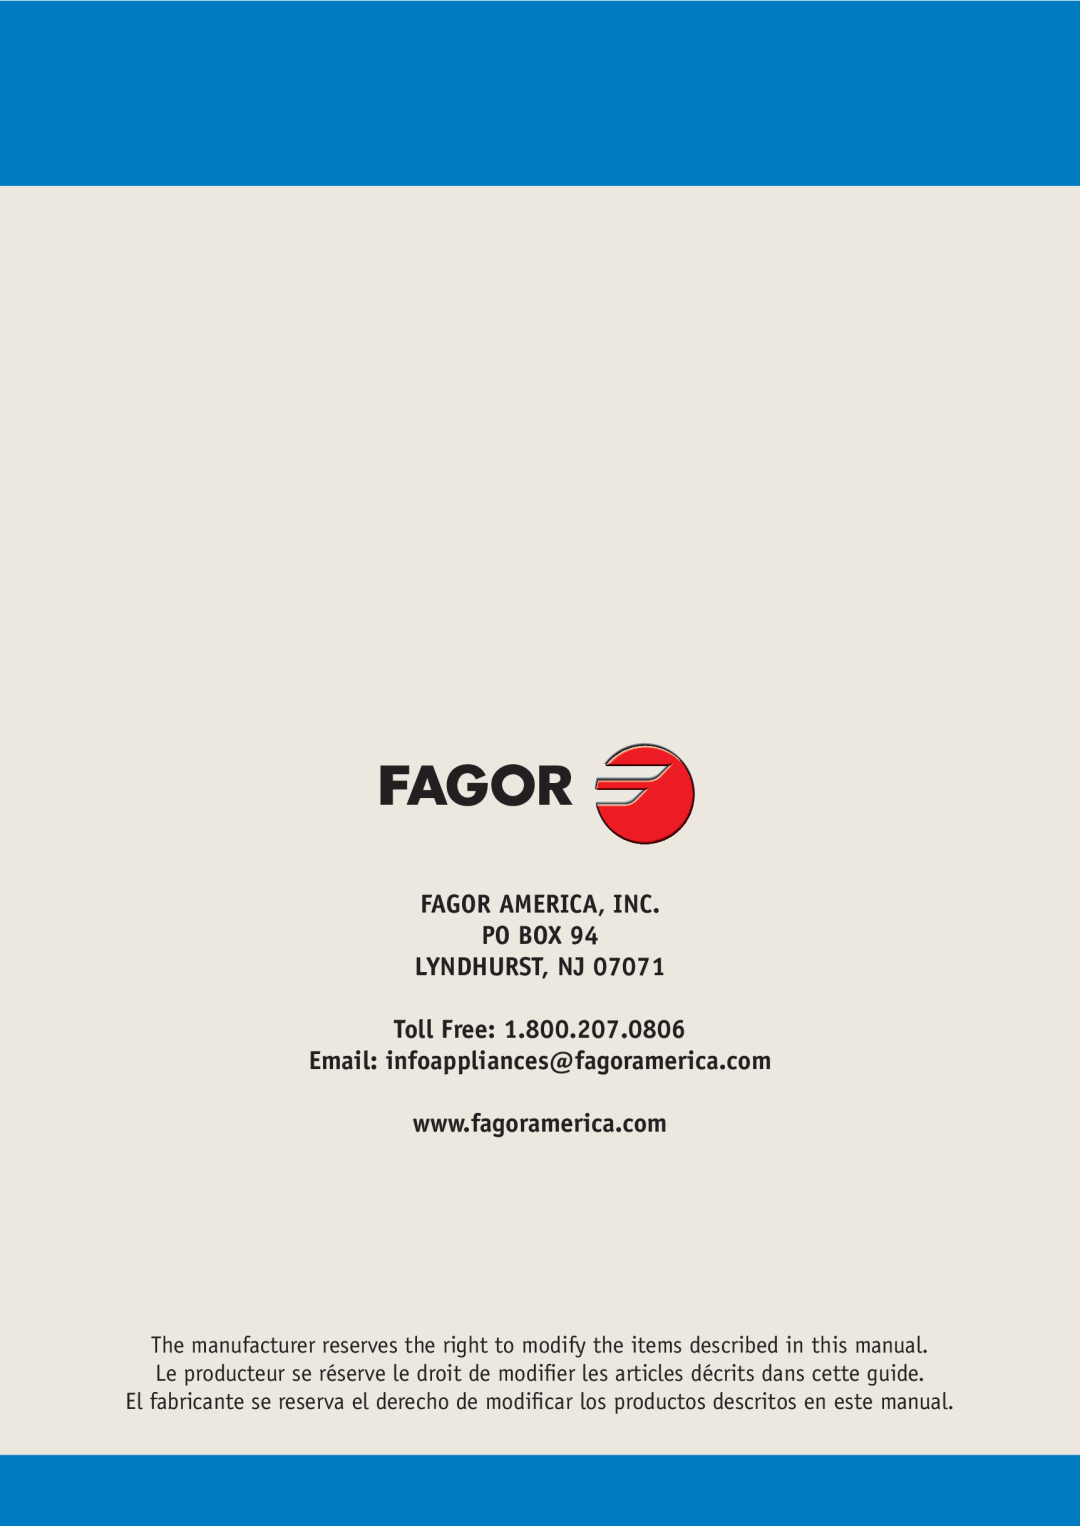 Fagor America 5HA-196X manual Fagor America, Inc Po Box Lyndhurst, Nj, Toll Free: Email: infoappliances@fagoramerica.com 